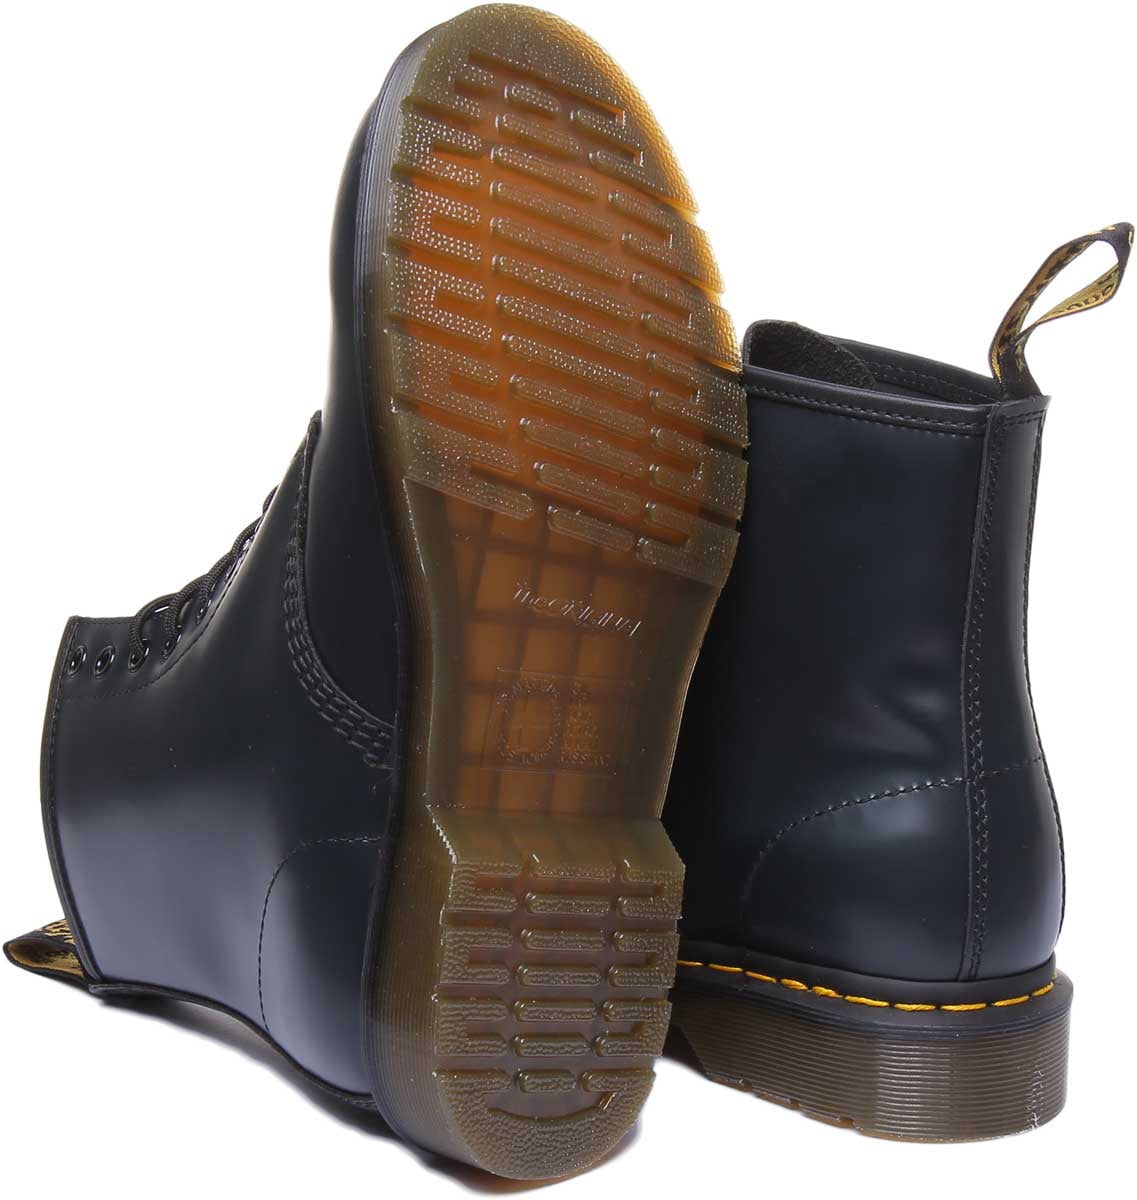 Dr. Martens Men's Shoes 1460 8 Eye Leather Boots 11822411